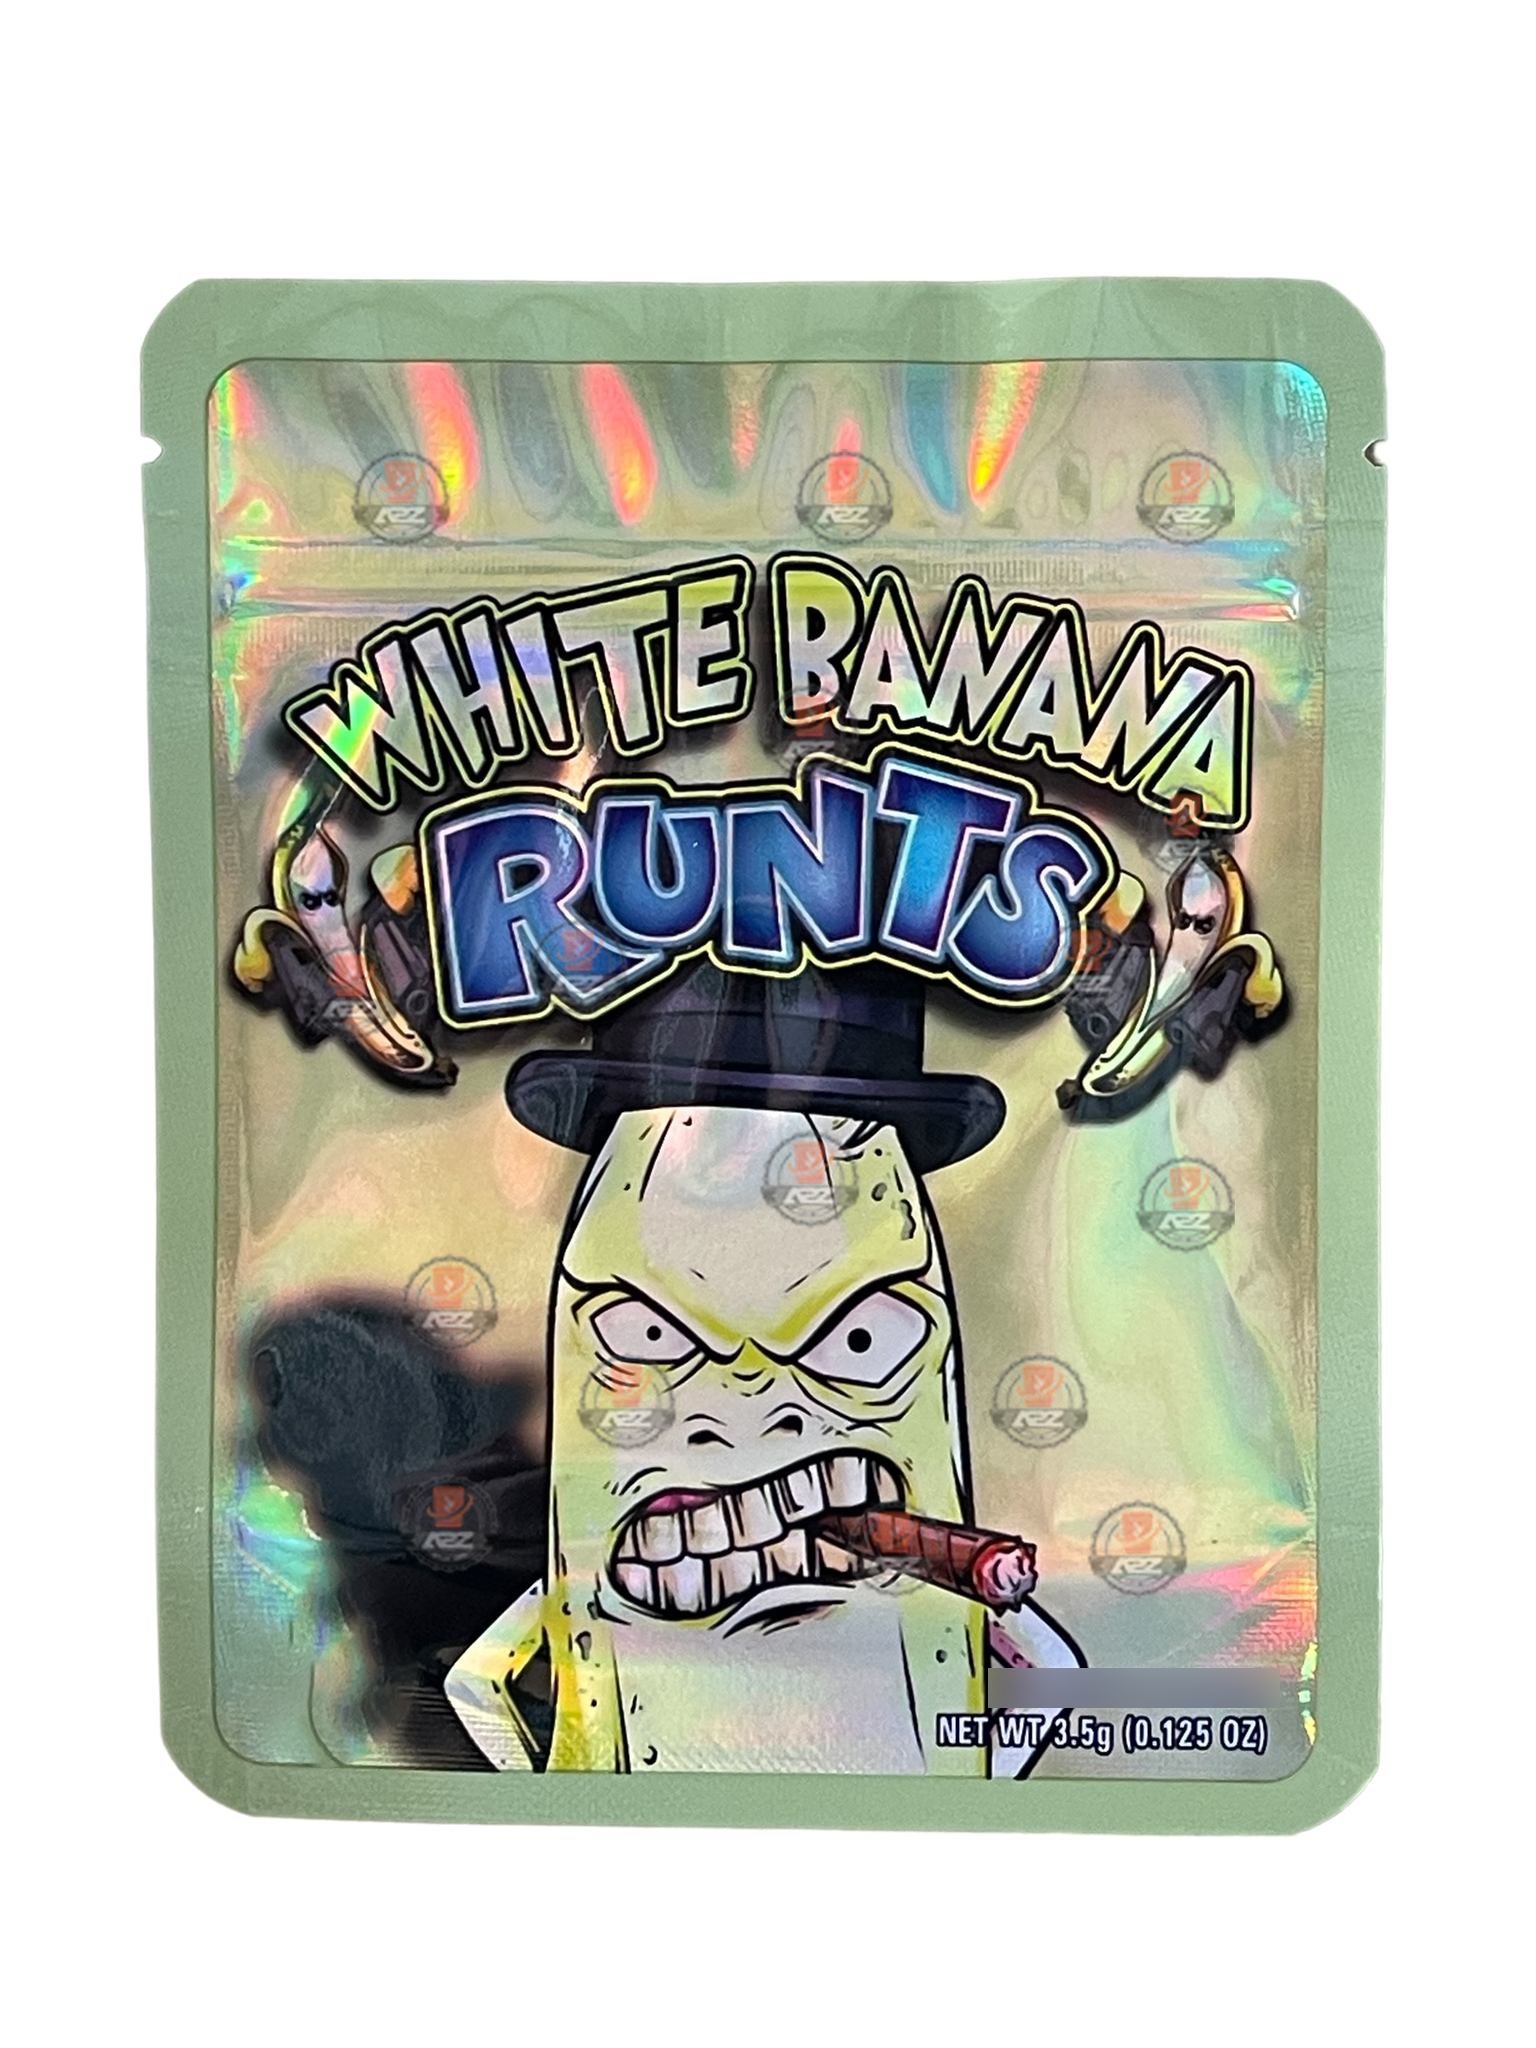 White Banana Runtz 3.5g Mylar Bag Holographic